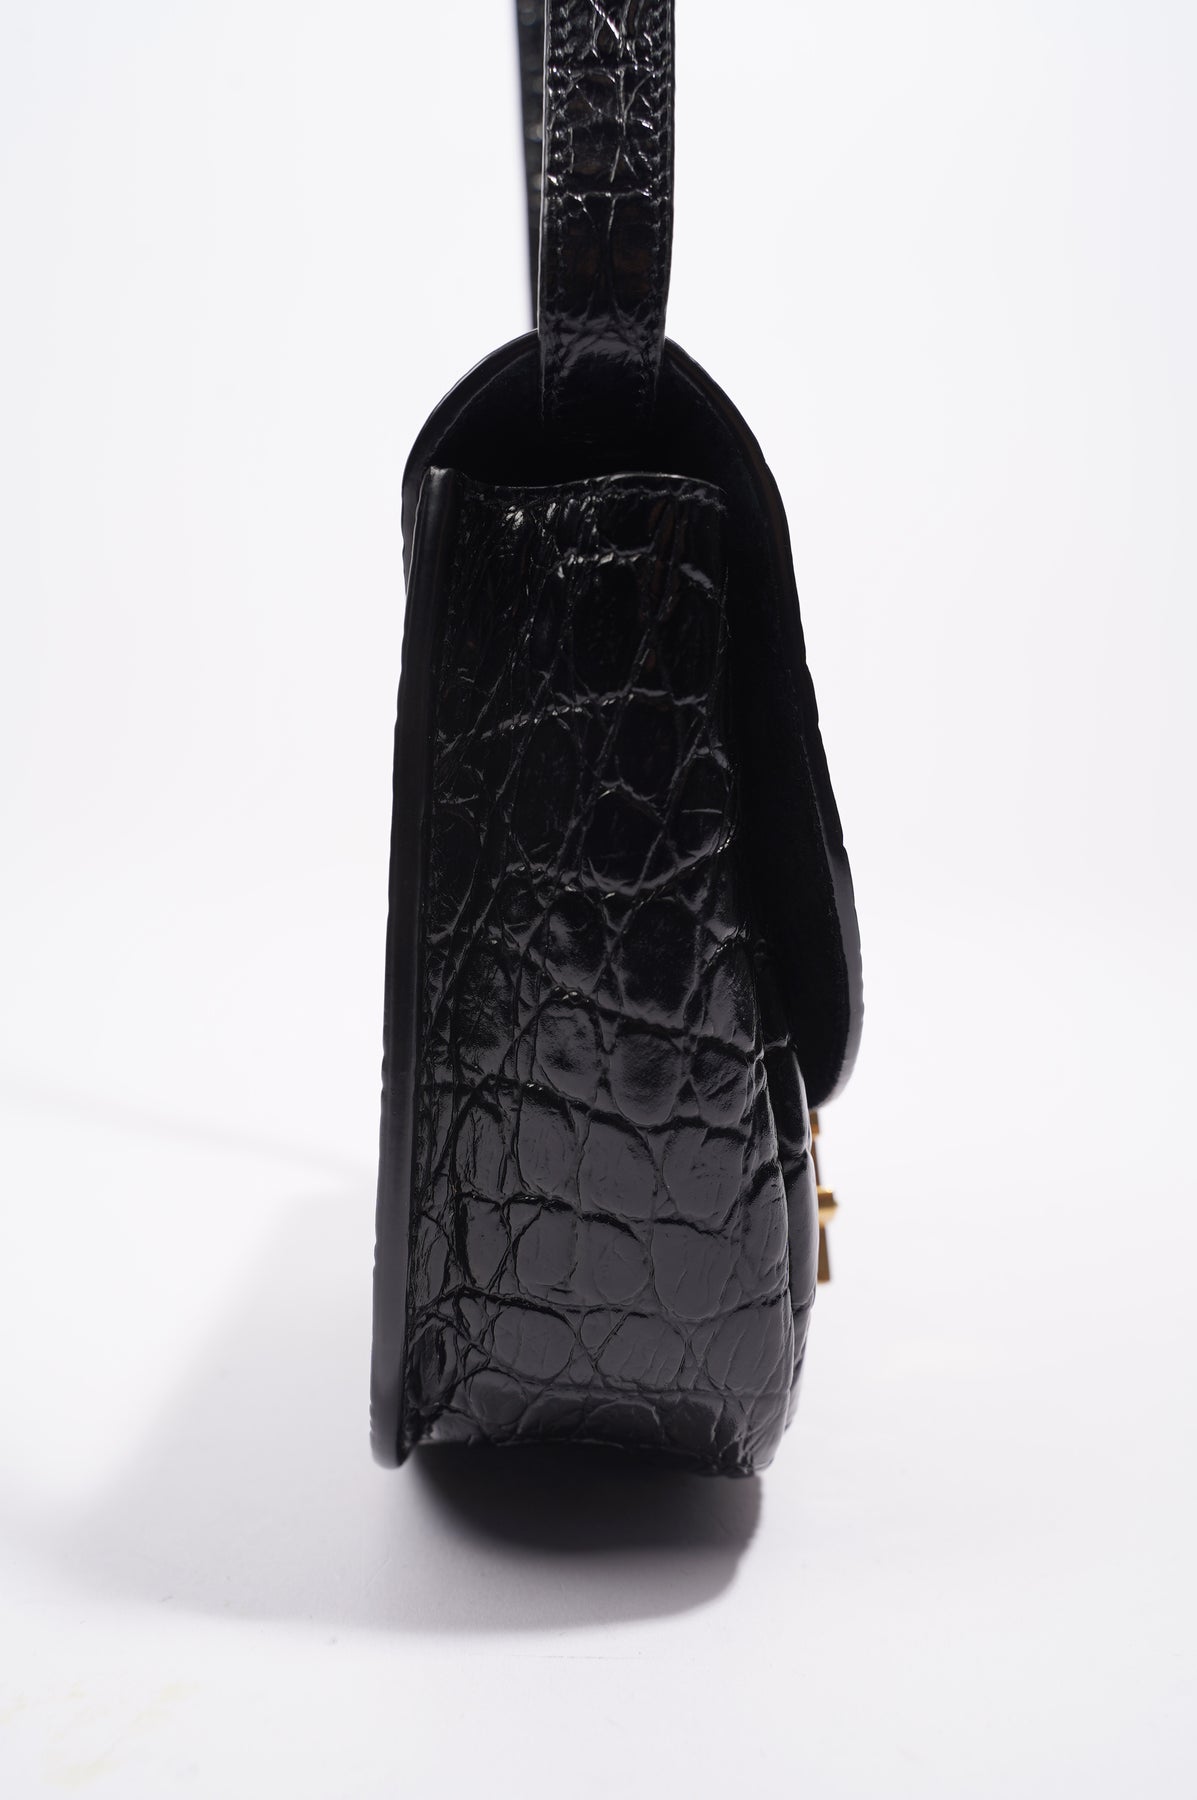 Saint Laurent Kaia Croc Embossed Leather Crossbody Bag in Black